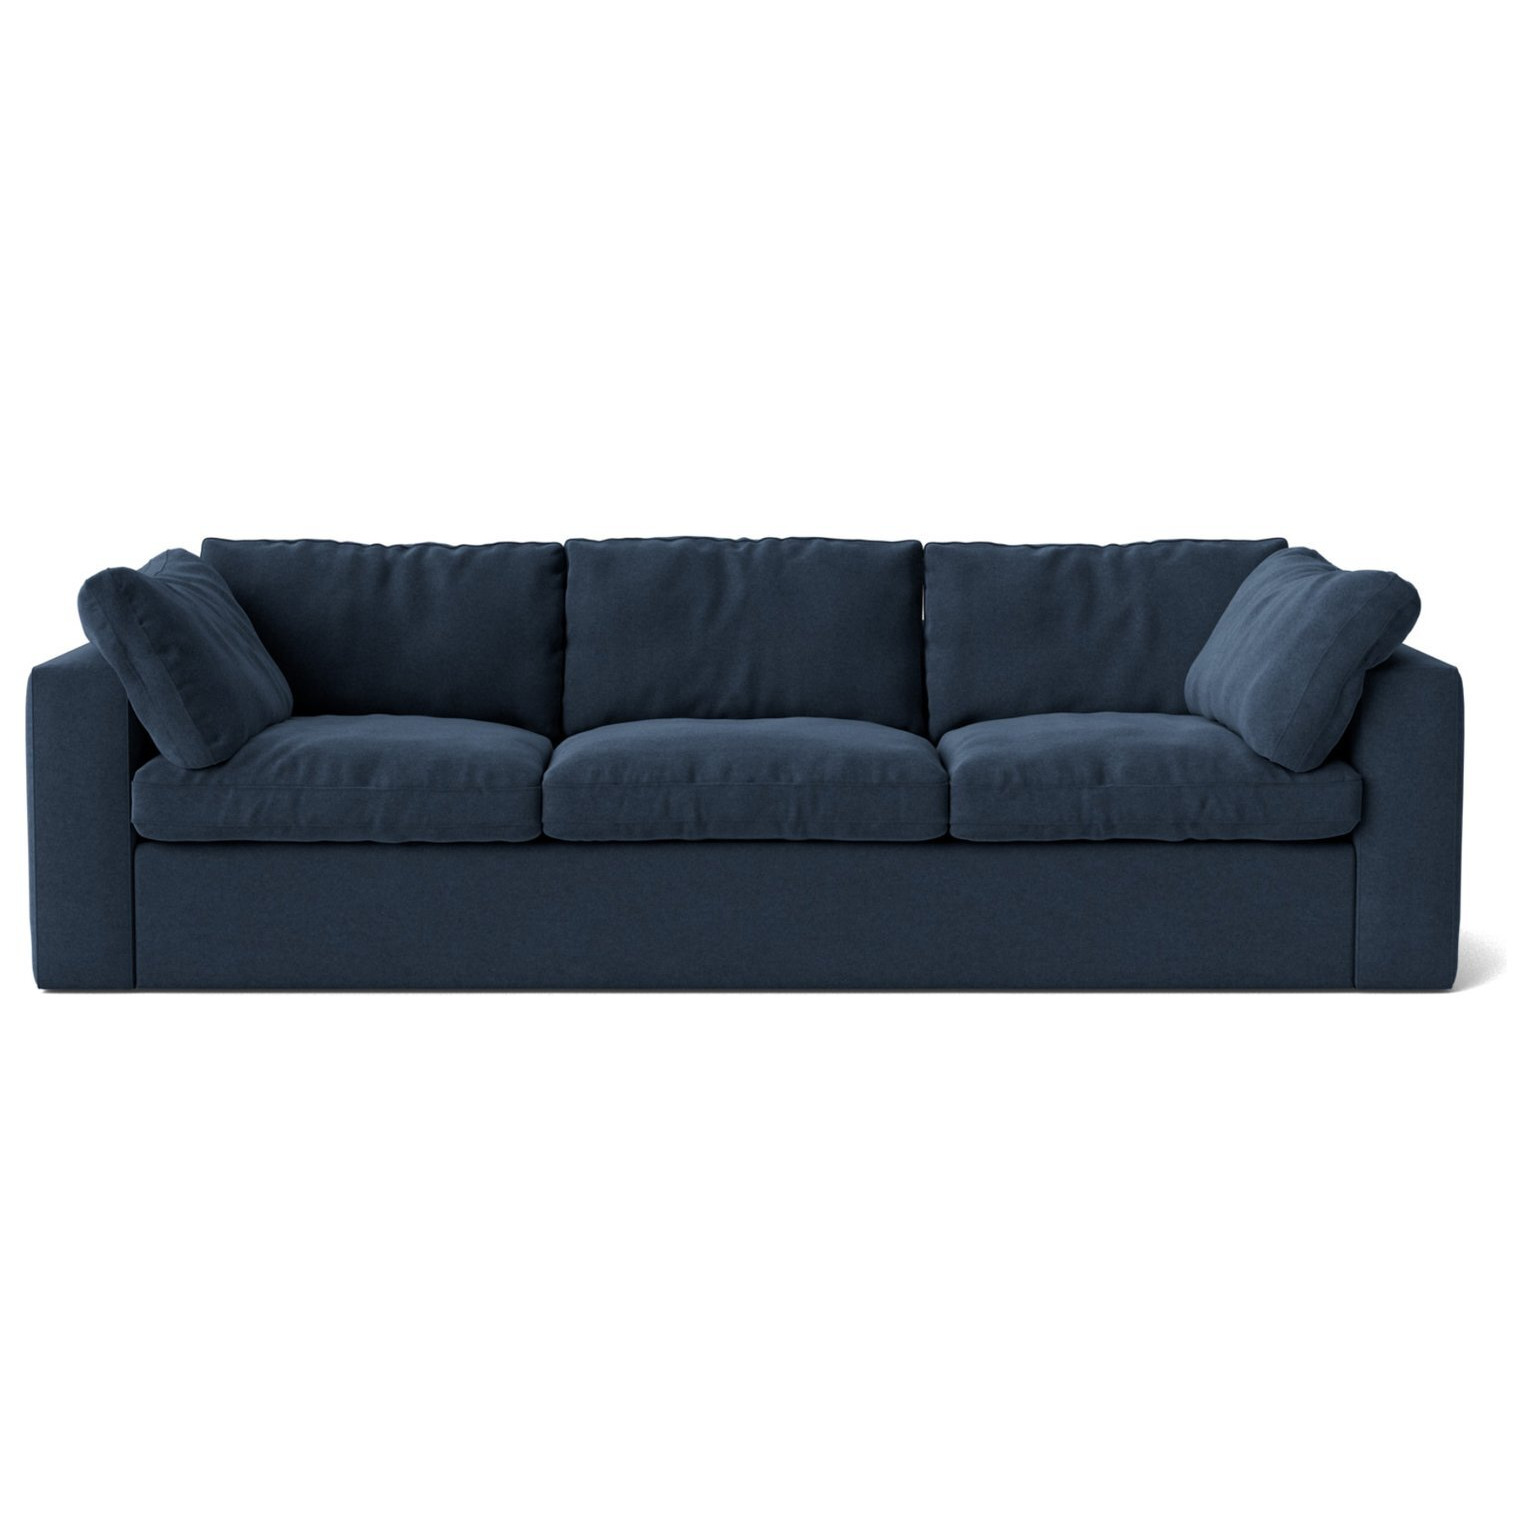 Swoon Seattle Fabric 3 Seater Sofa - Indigo Blue - image 1